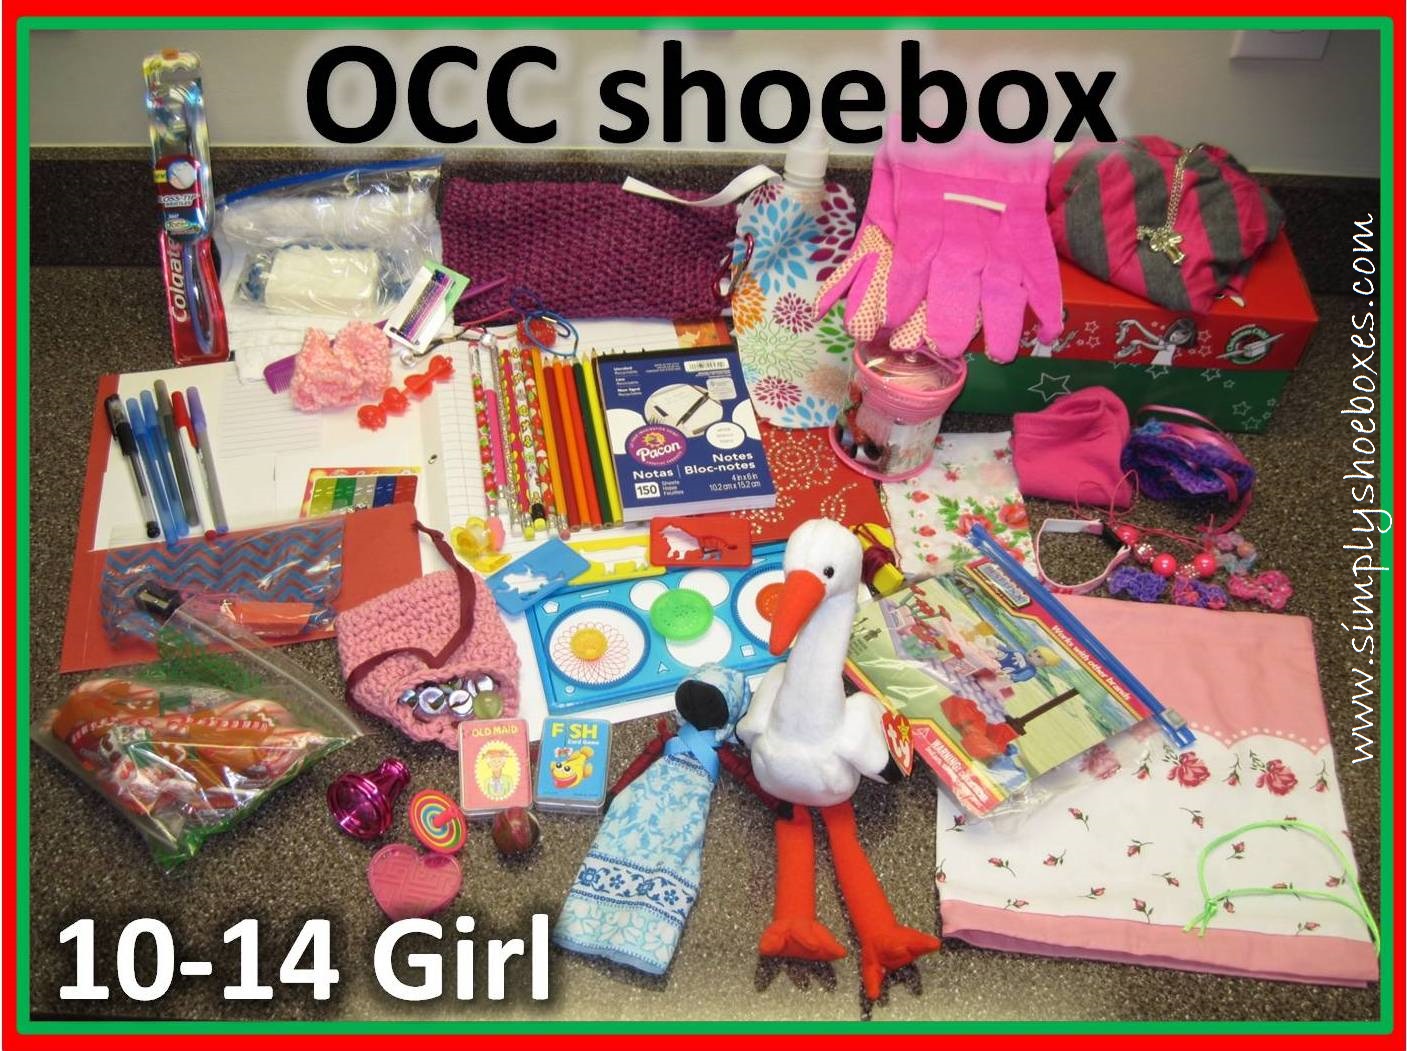 Simply Shoeboxes: Operation Christmas Child Shoebox for 10-14 Year